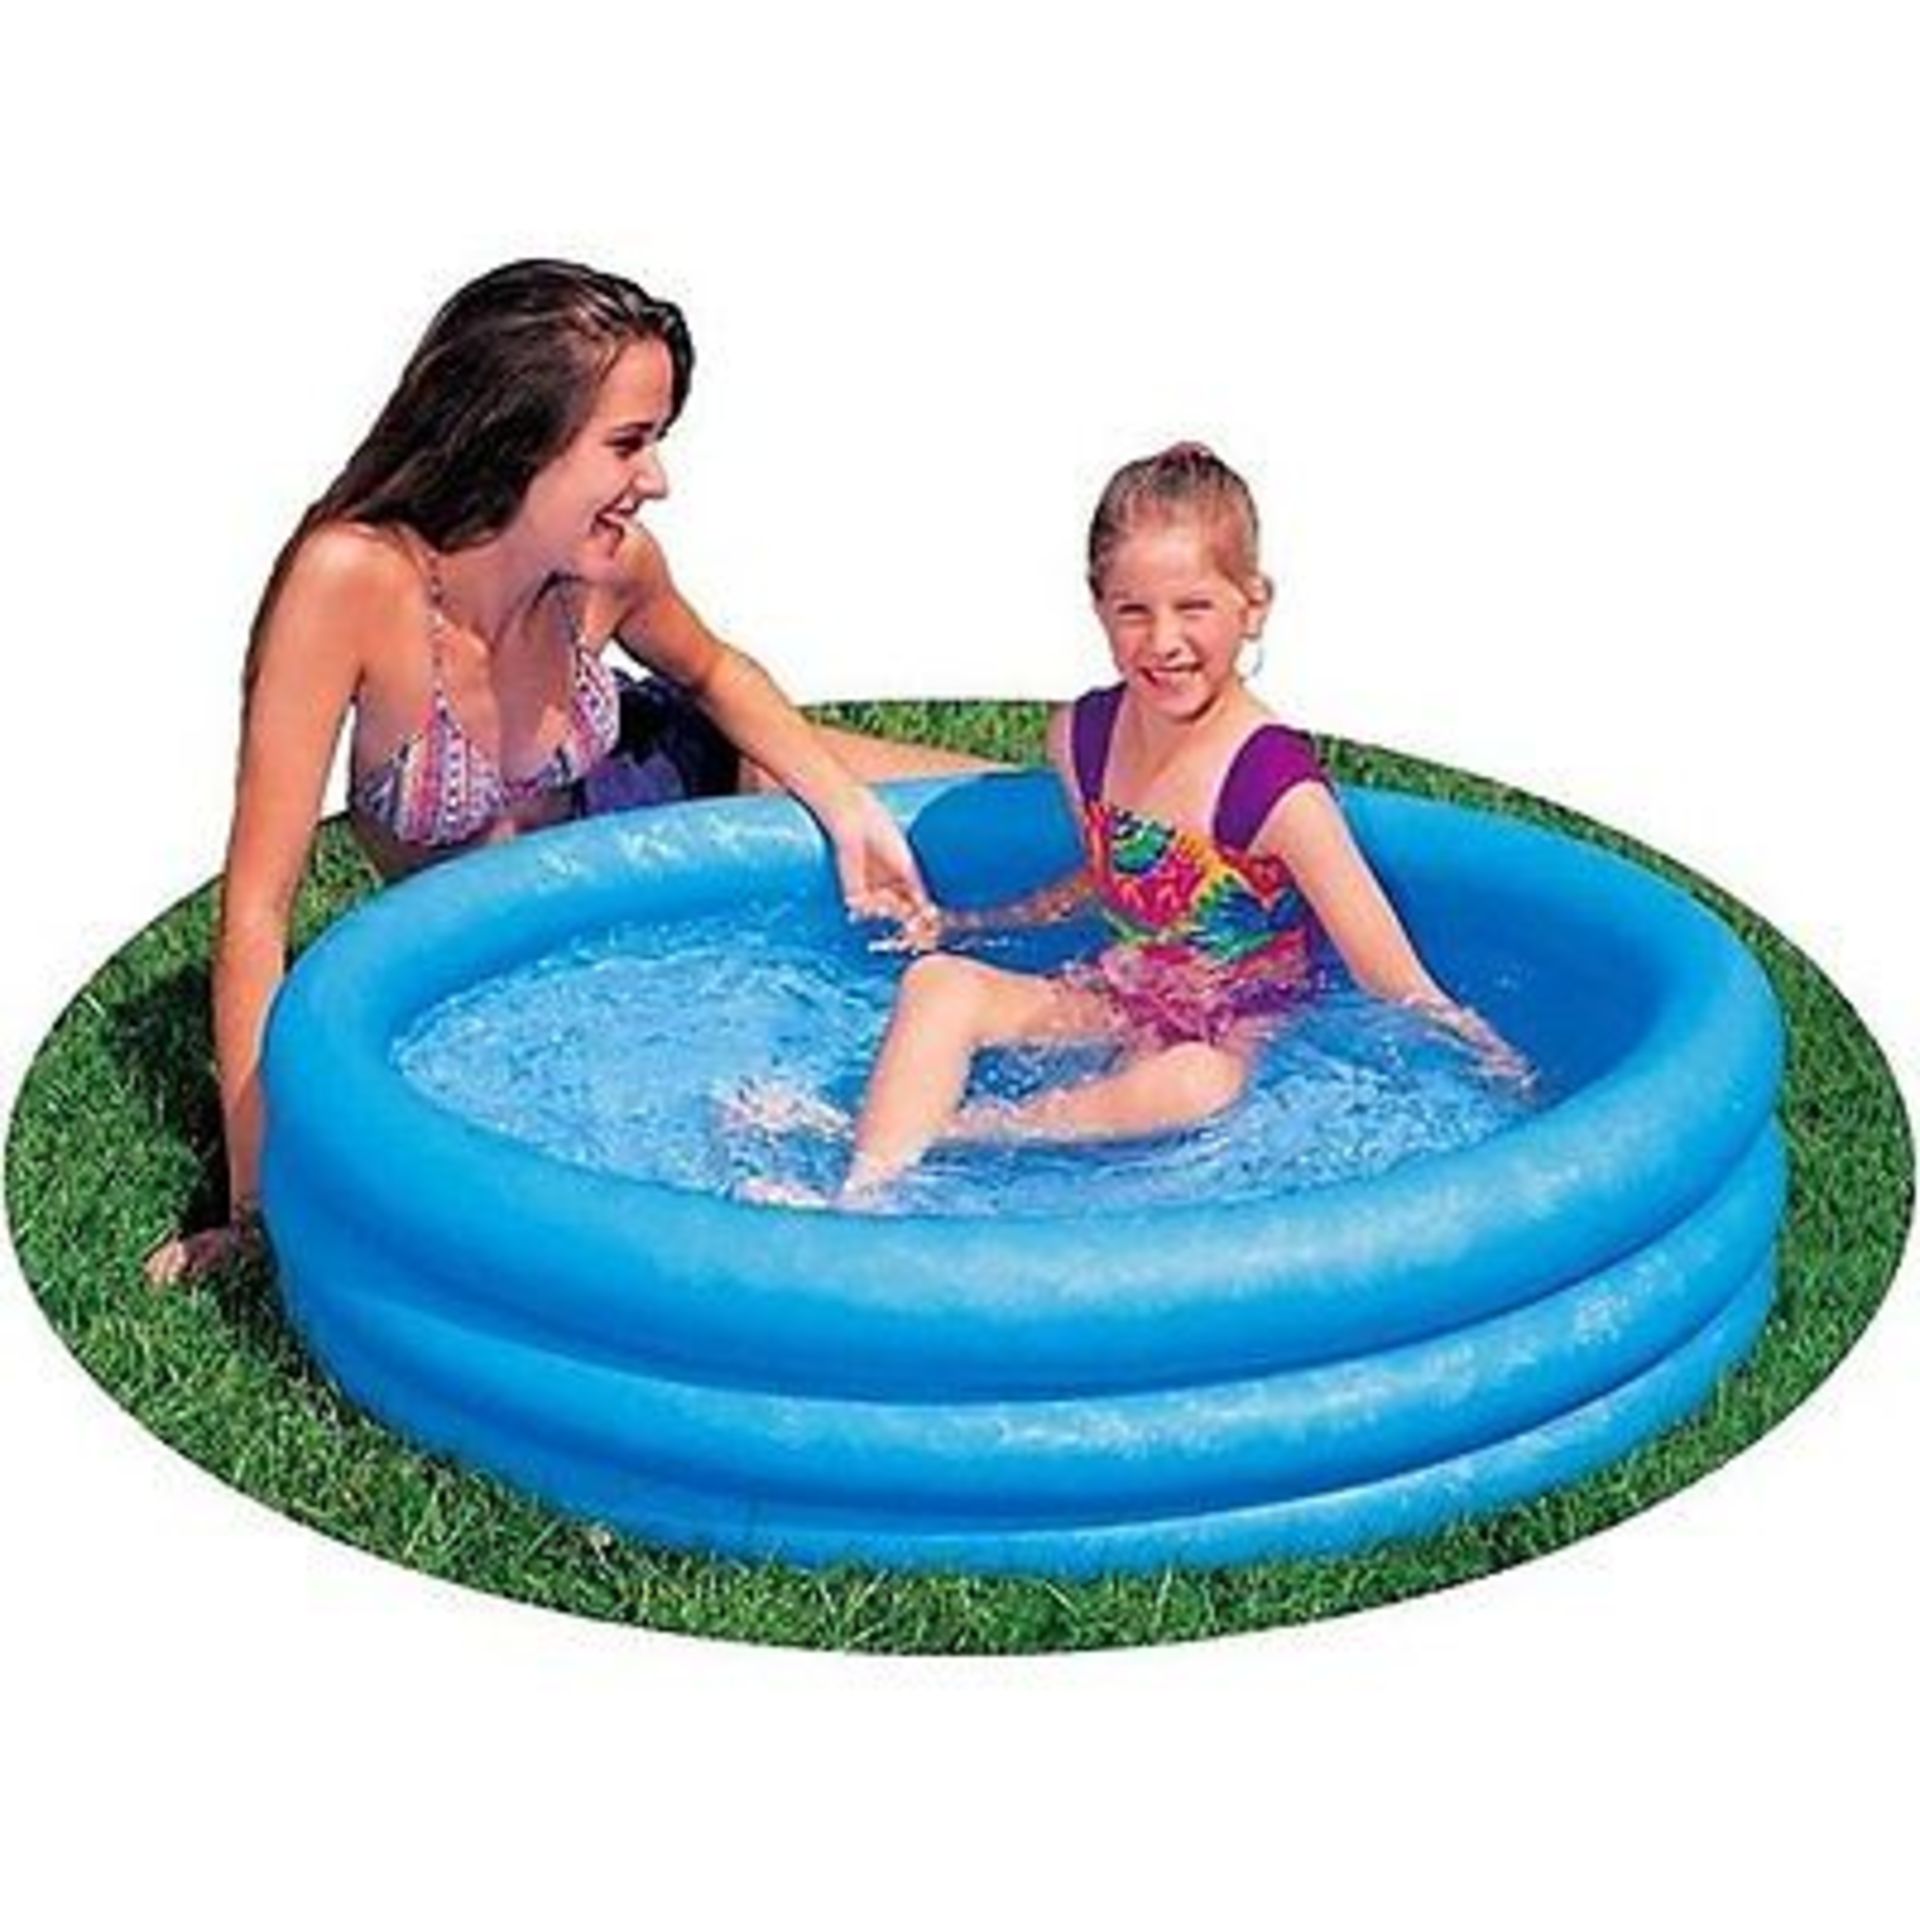 + VAT Brand New Kids Outdoor Three Ring Pool Age 3 Years + ISP £7.49 (Ebay)